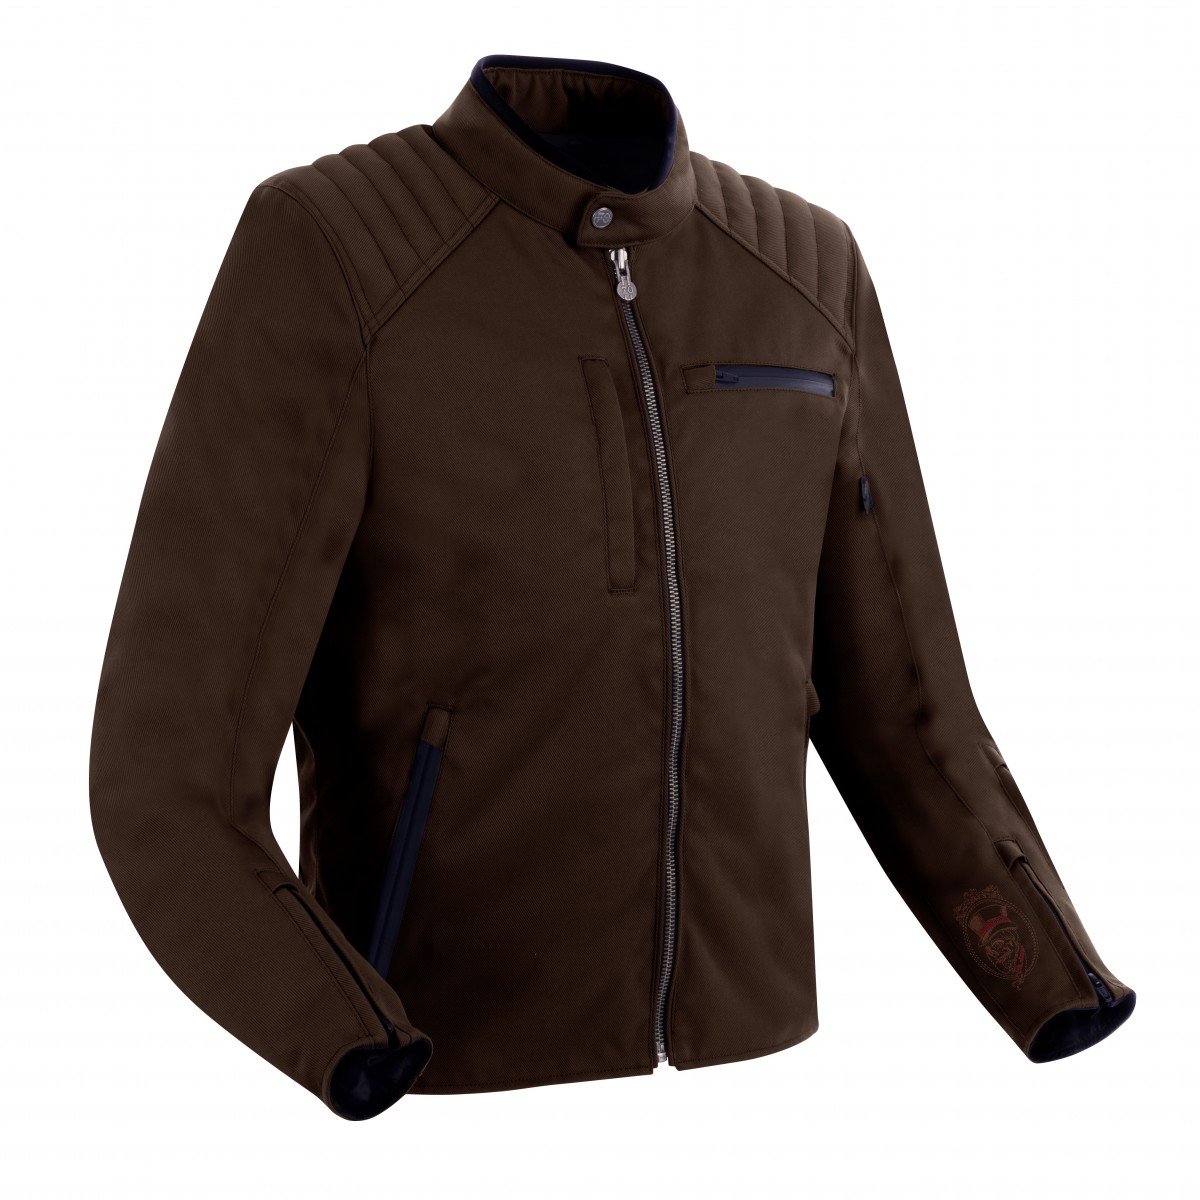 Image of Segura Eternal Jacket Brown Size XL ID 3660815168585